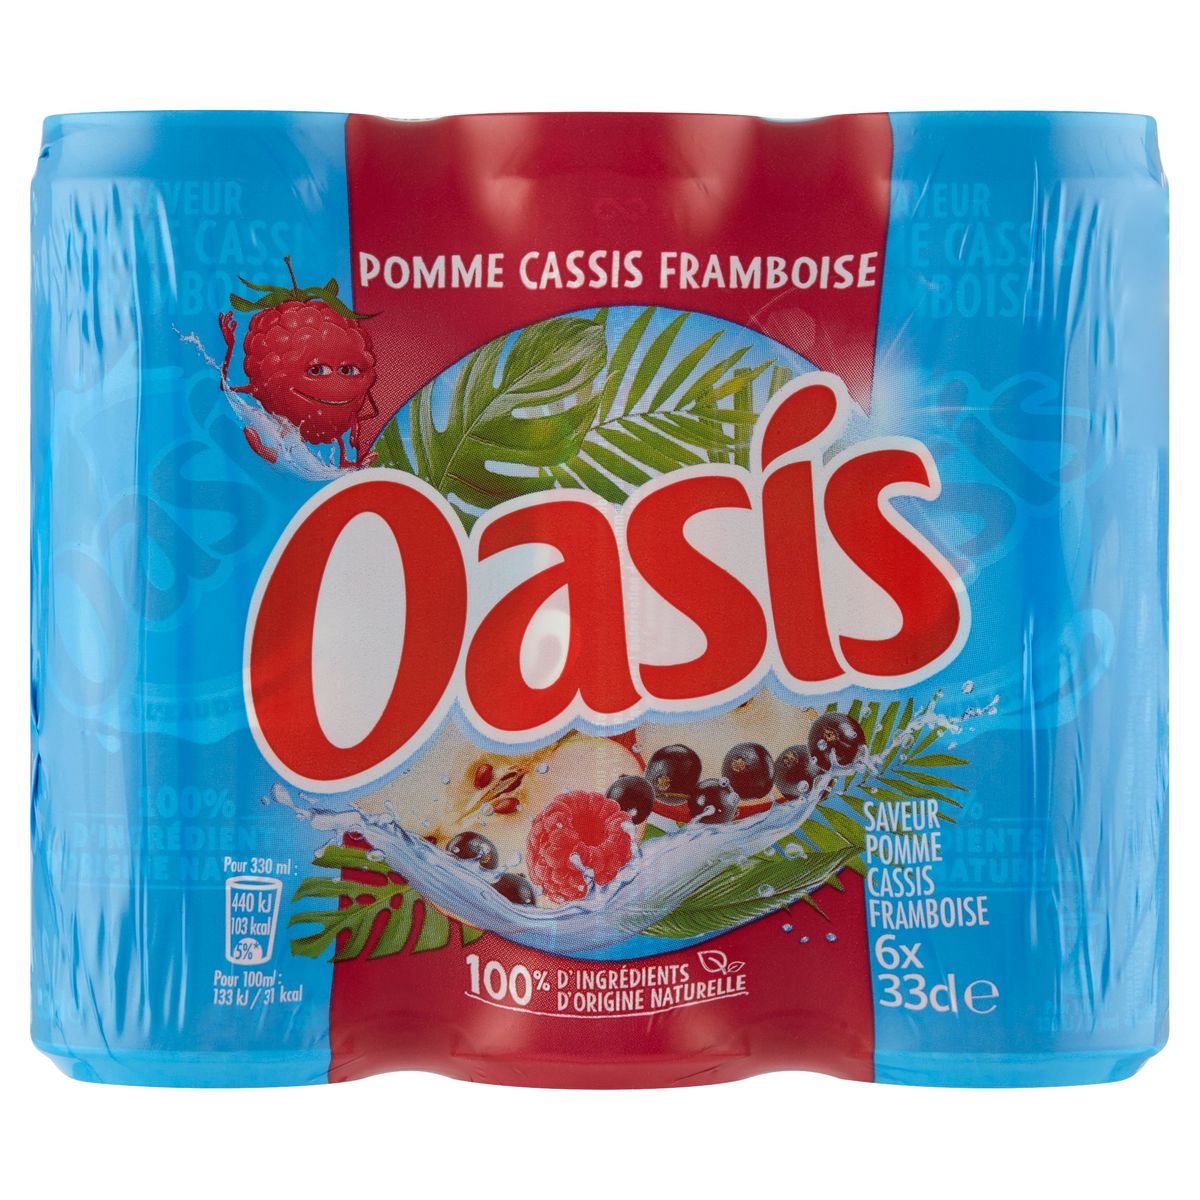 Oasis Appel Zwarte Bes Framboos Smaak 6 x 33 cl